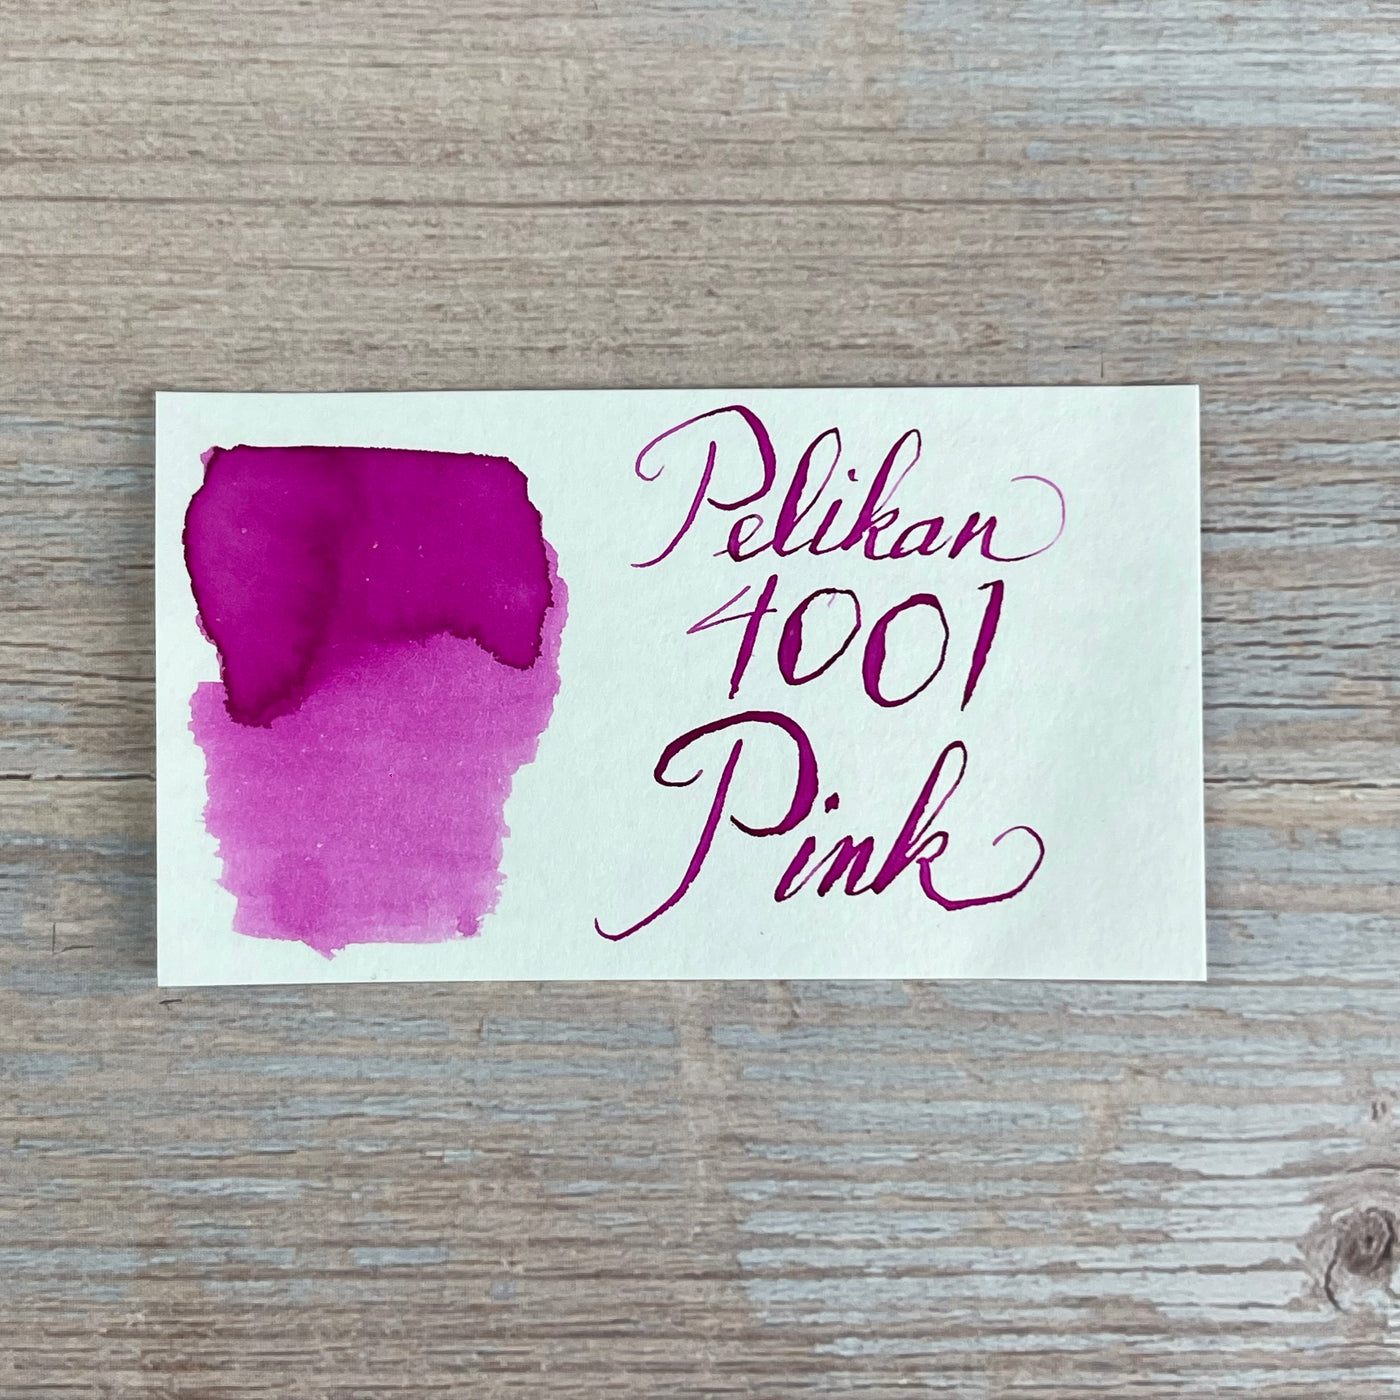 Pelikan 4001 Pink - 30ml Bottled Ink